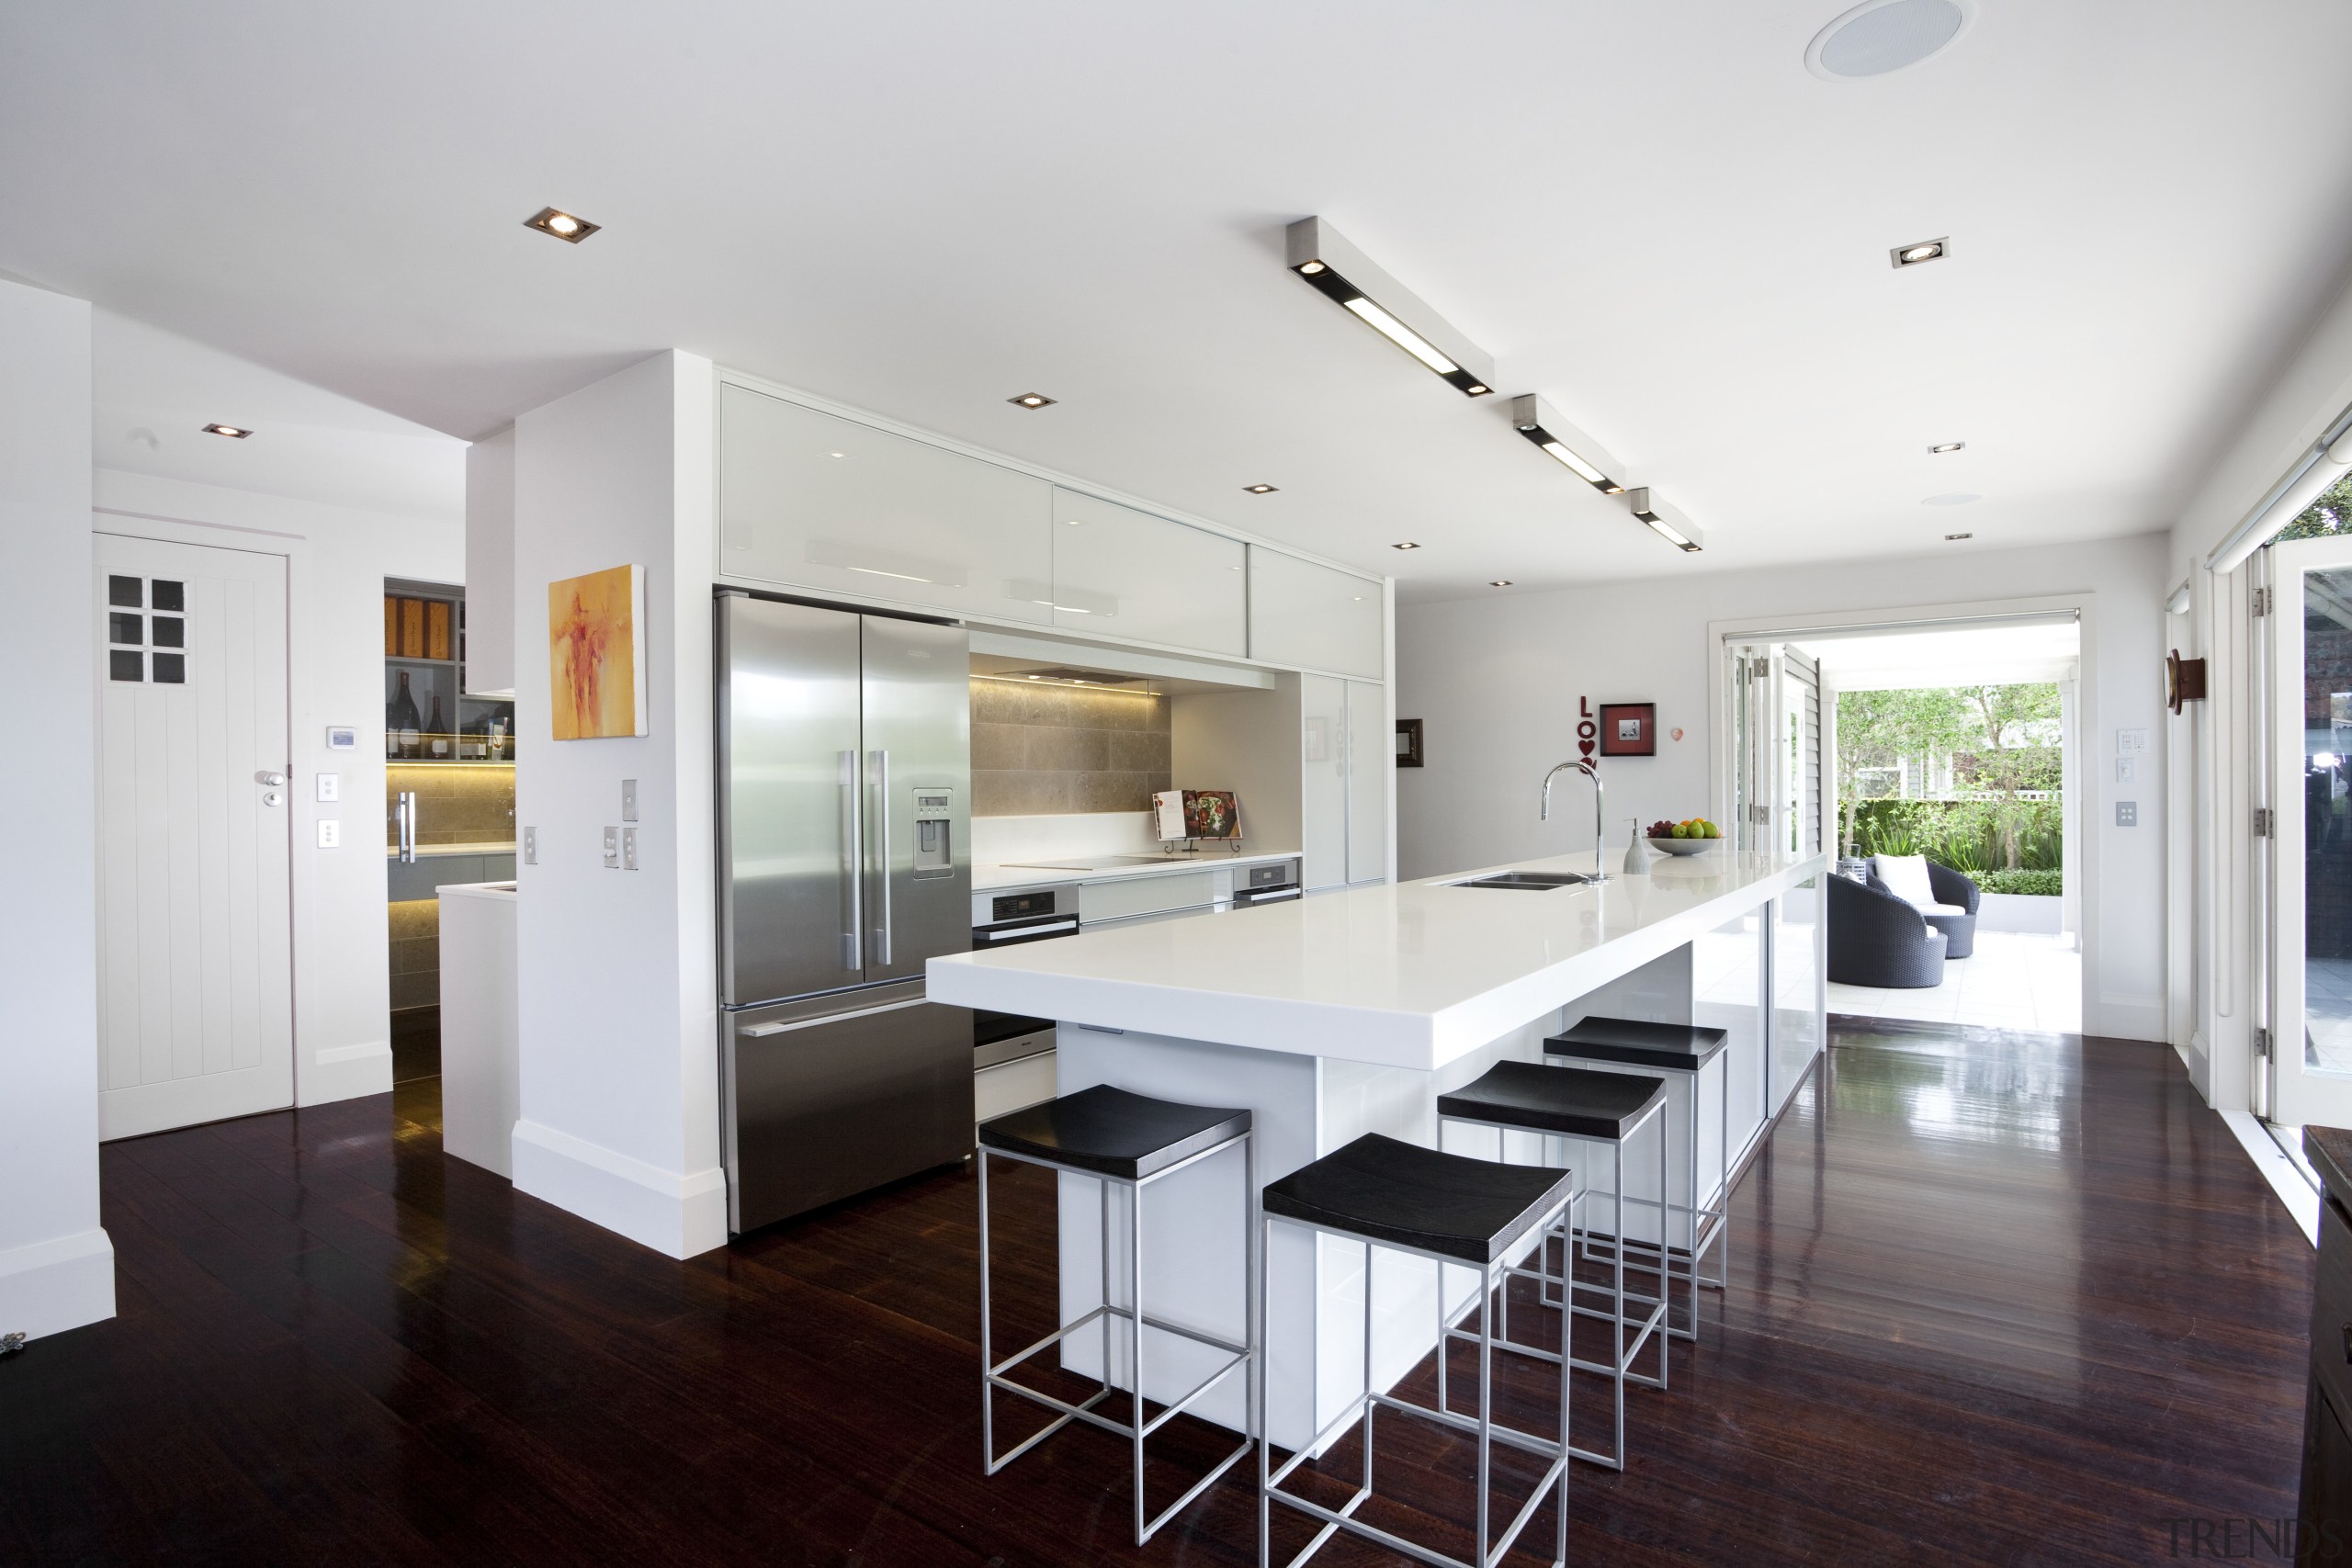 Kitchen designed by Natalie Du Bois. - Kitchen architecture, ceiling, countertop, floor, house, interior design, kitchen, property, real estate, room, white